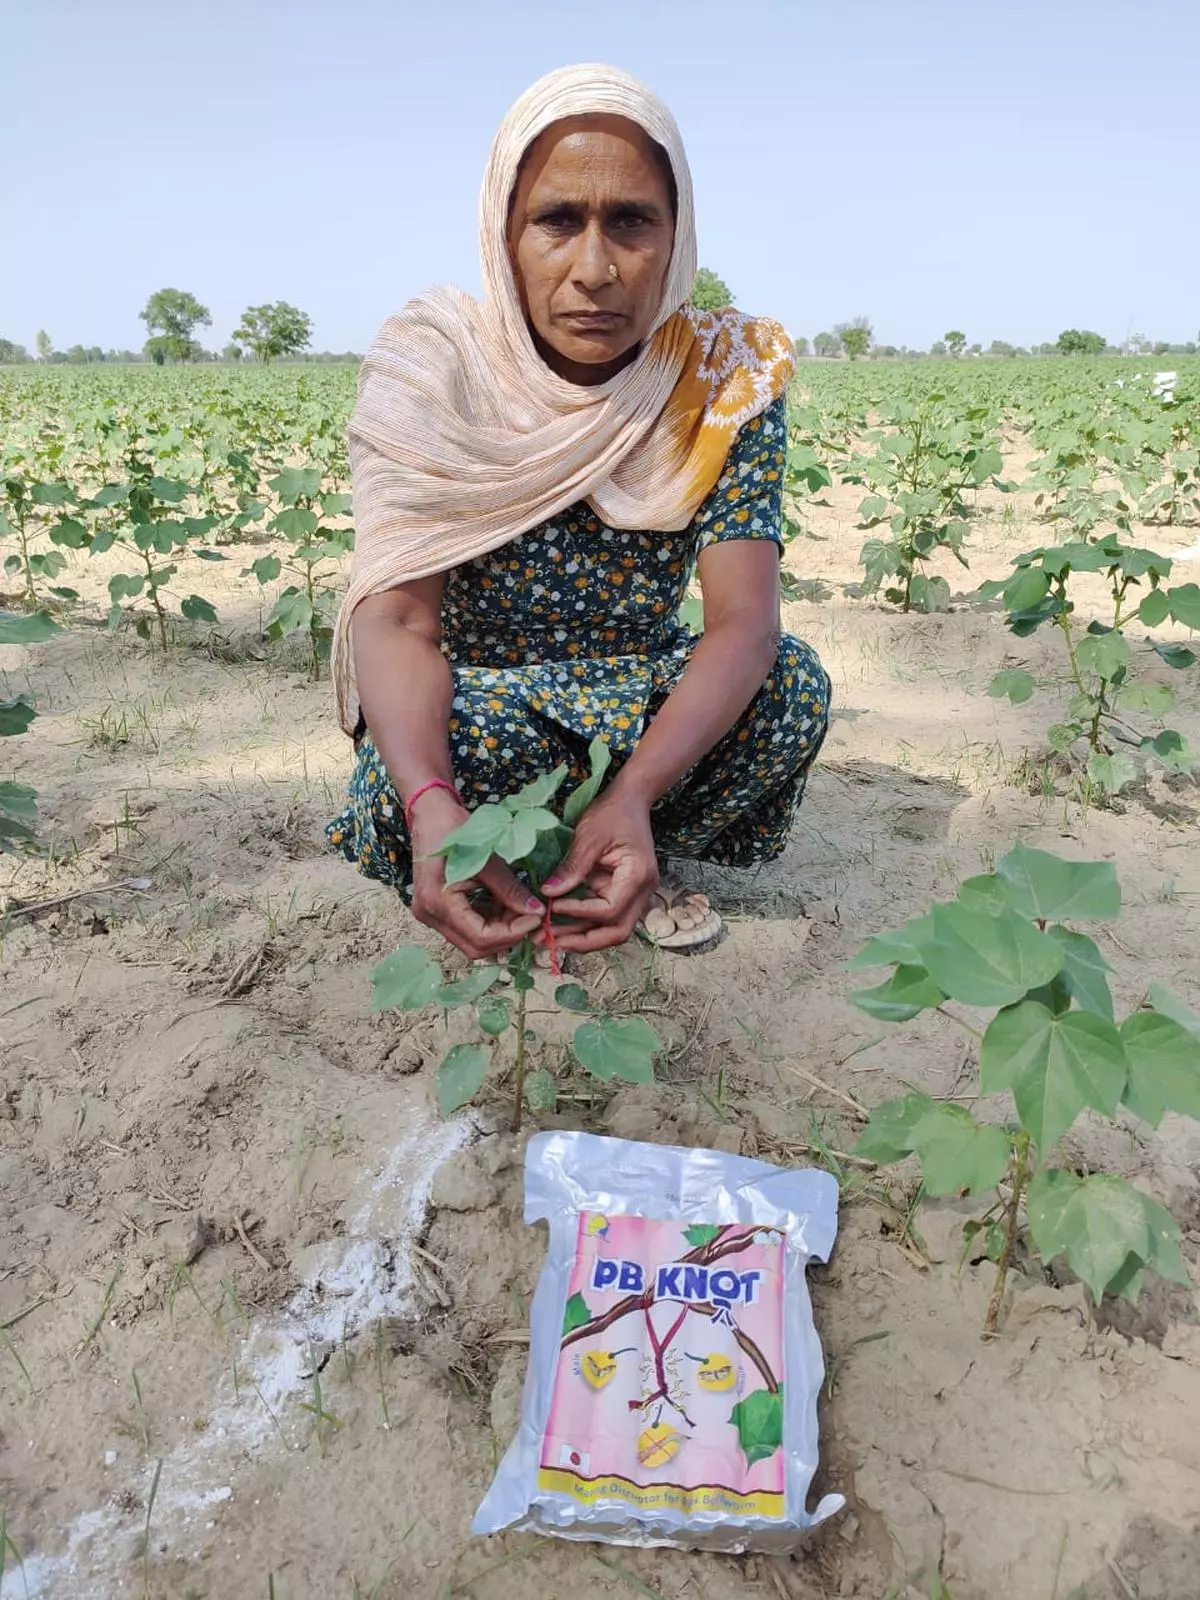 SABC-trained farm labour tagging novel Mating disruption PBKnot tech to ward off pink bollworm at village Dharampura, Sirsa, Haryana recently